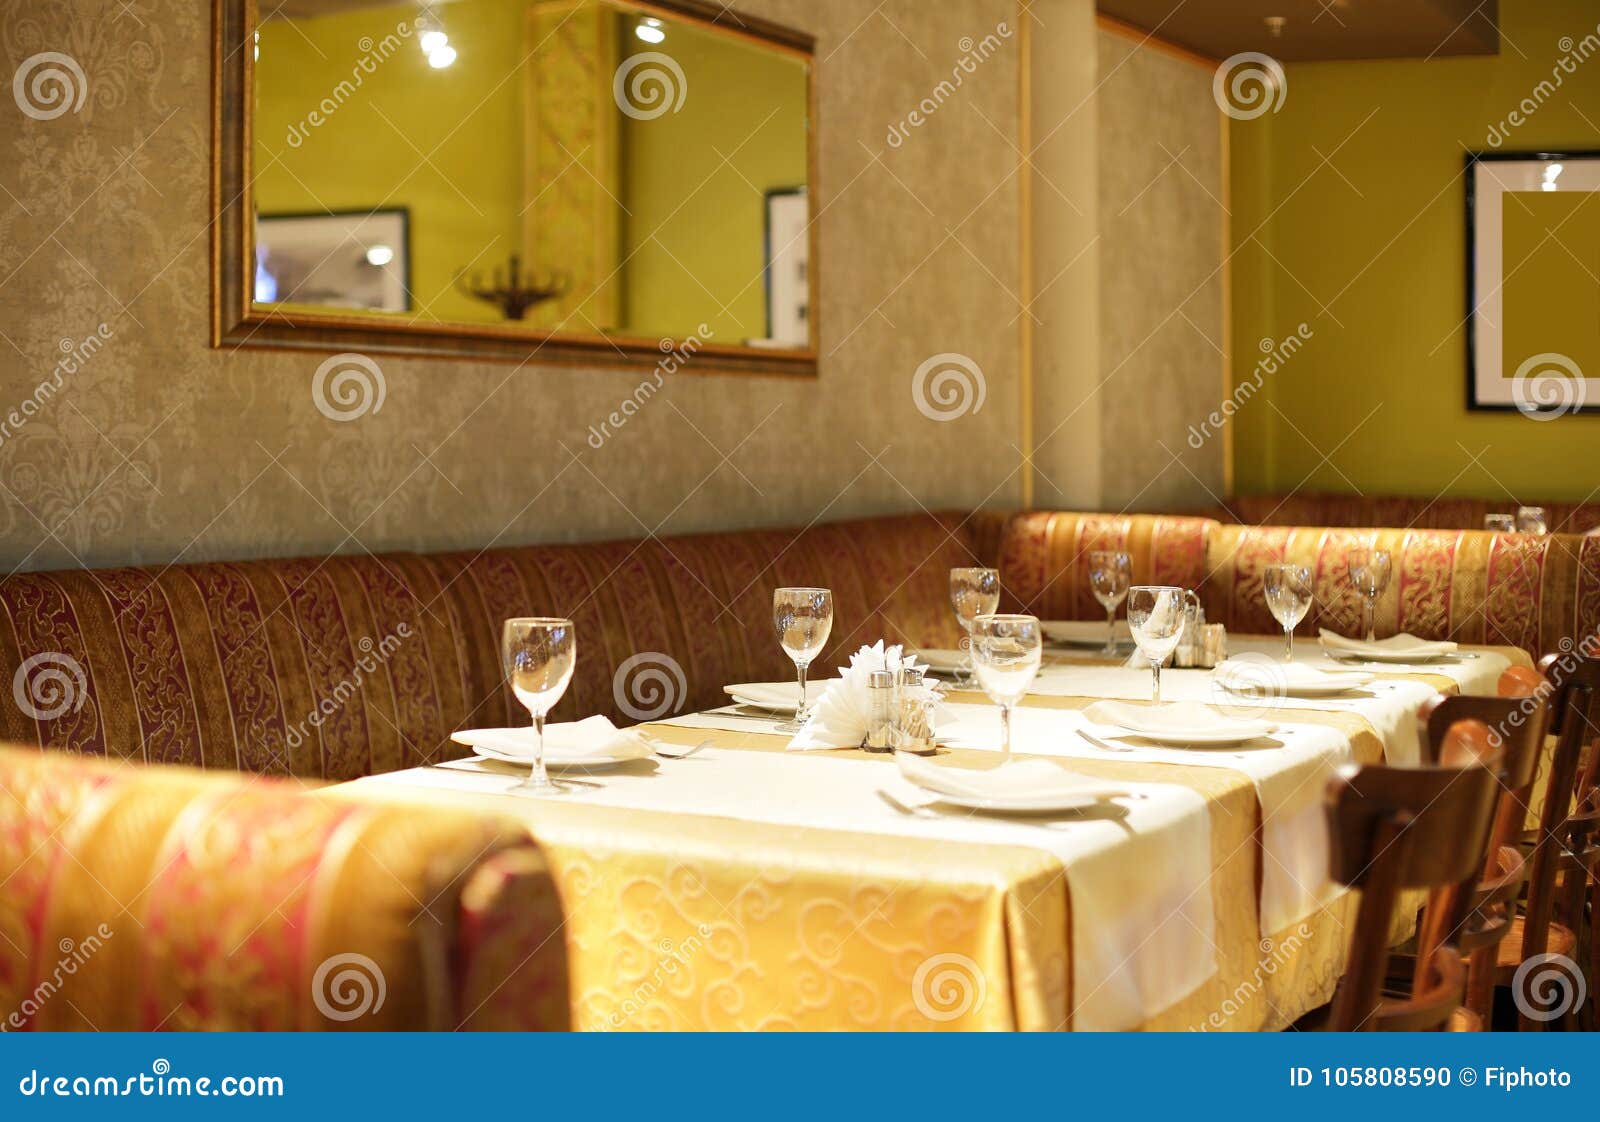 European Restaurant In Bright Colors Stock Photo Image Of